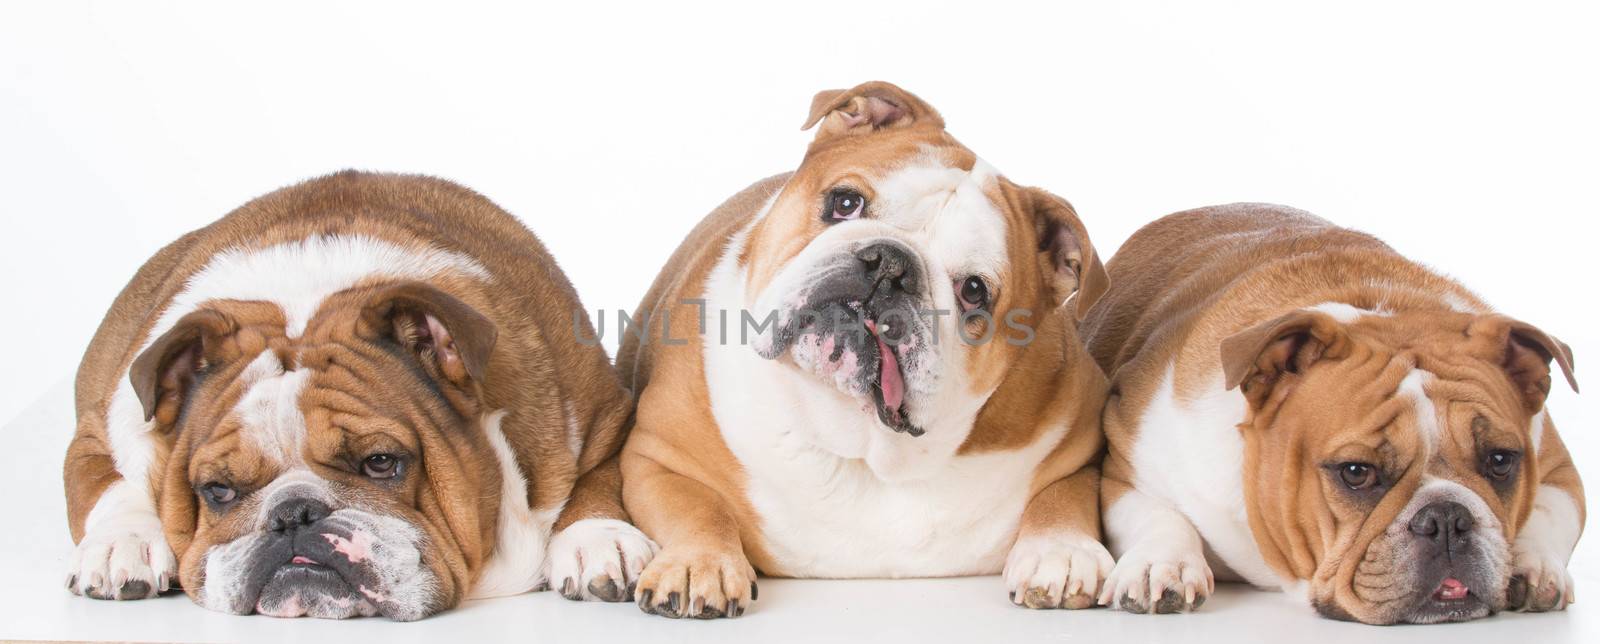 three bulldogs by willeecole123